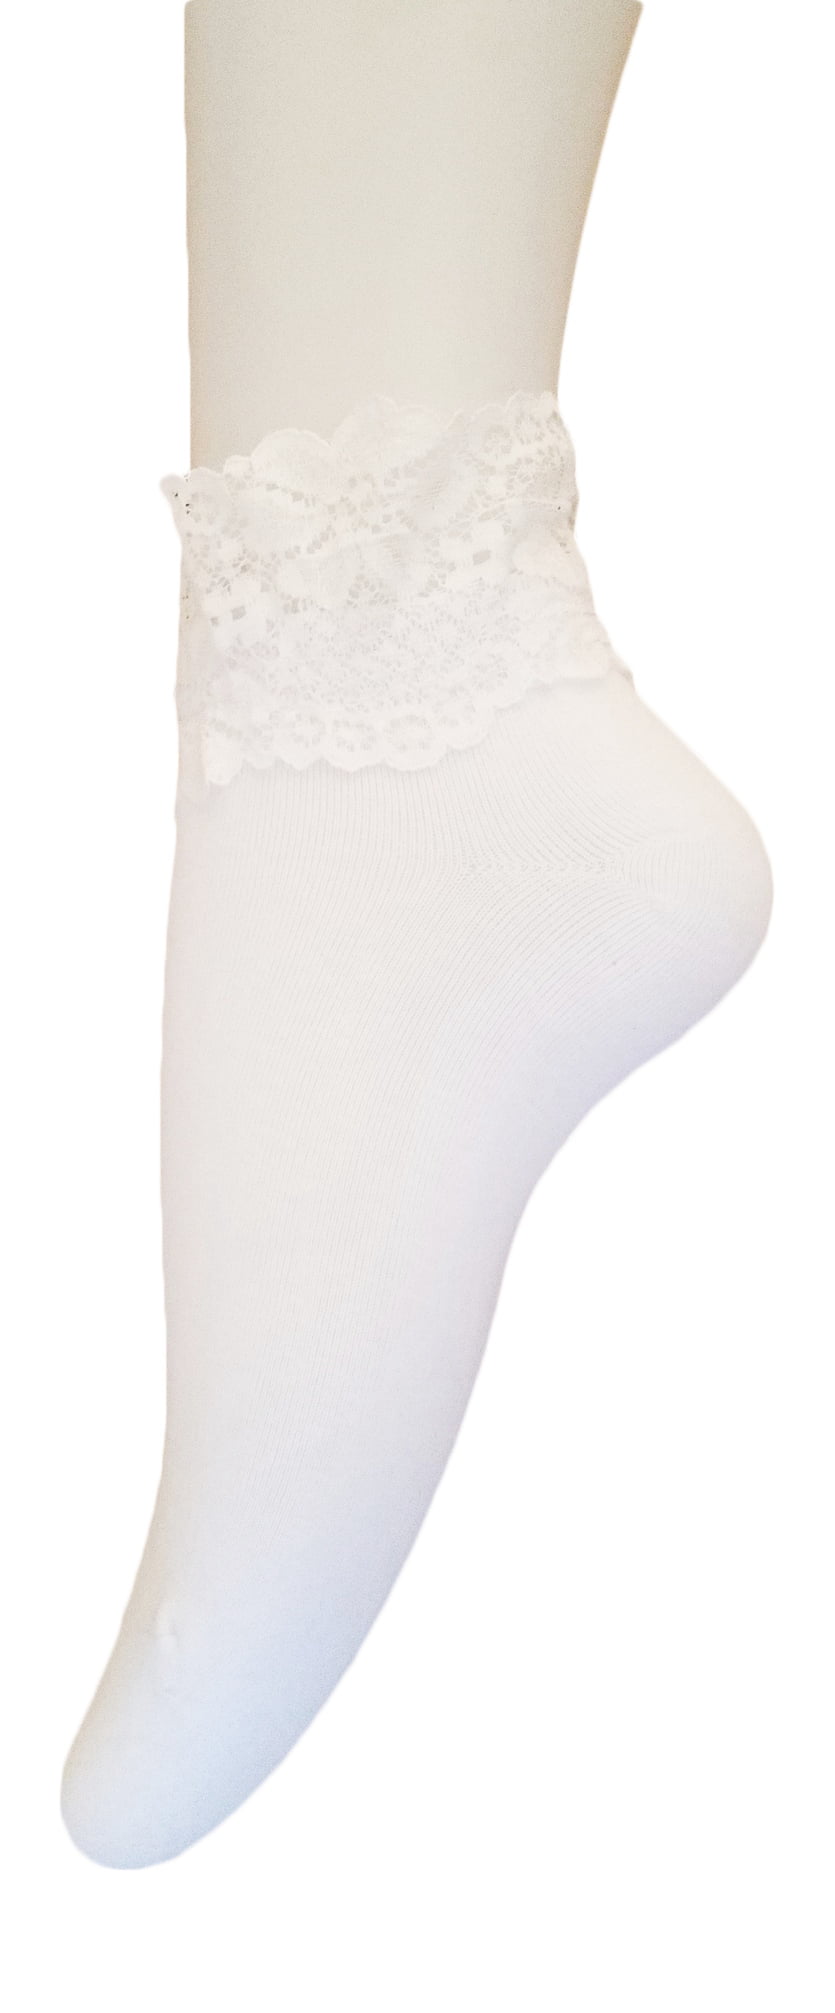 AM Landen - AM Landen Super Cute White Women's Lace Ruffle Ankle Socks ...